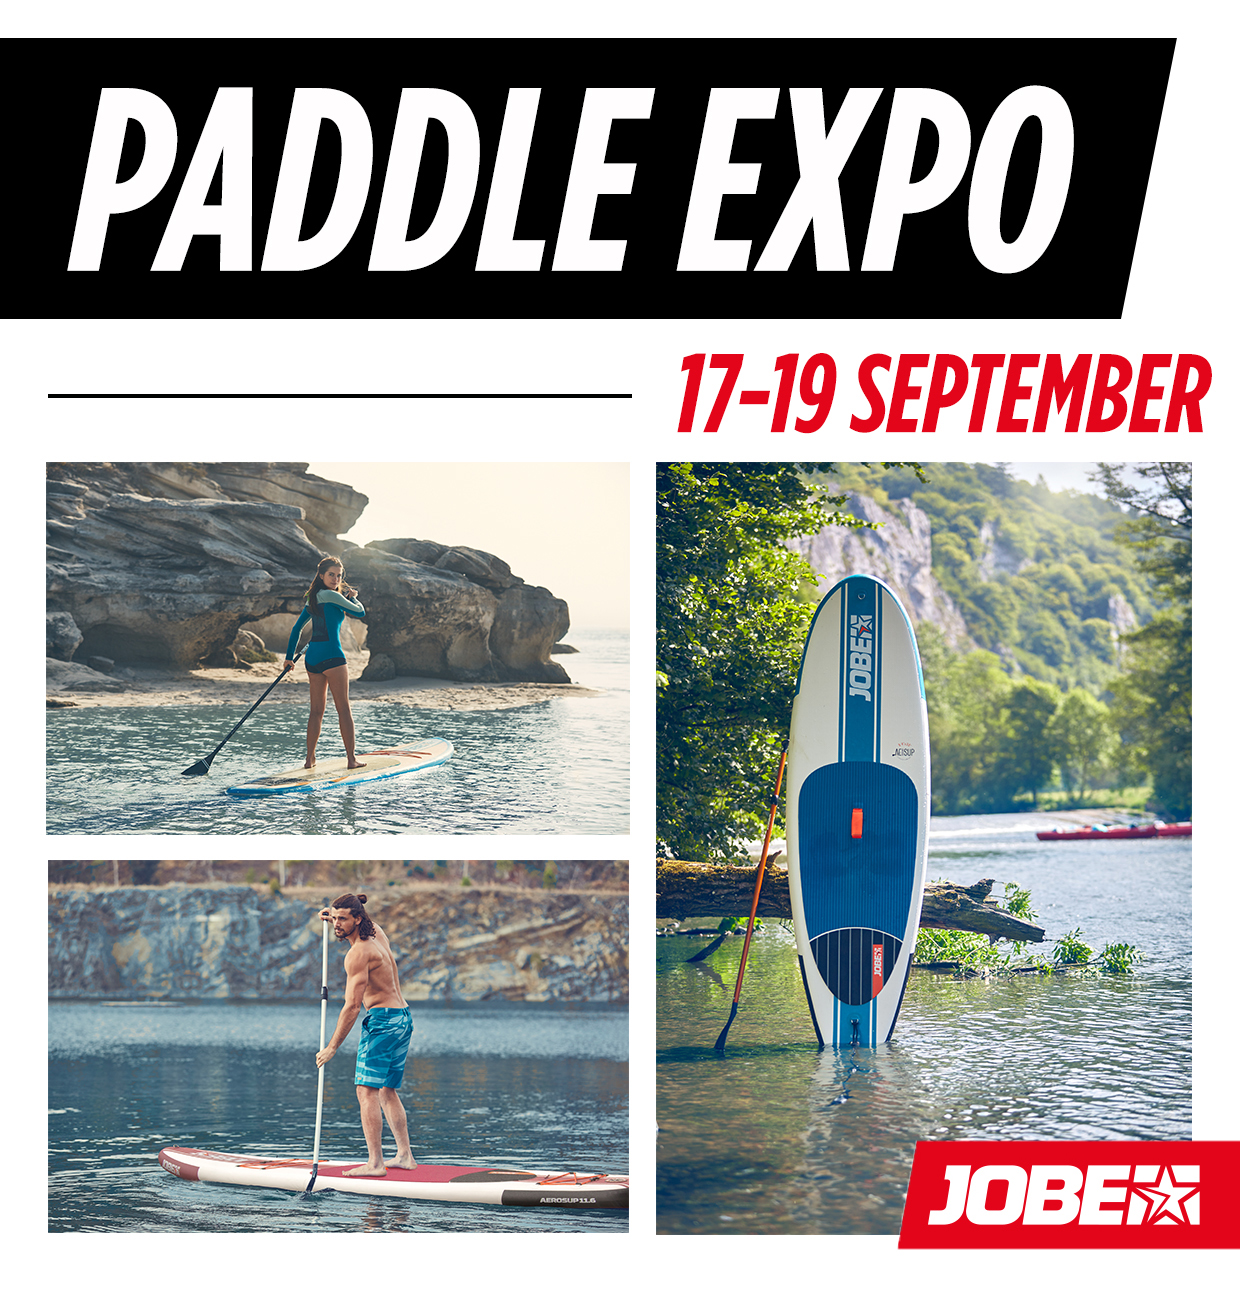 Next week Paddle Expo